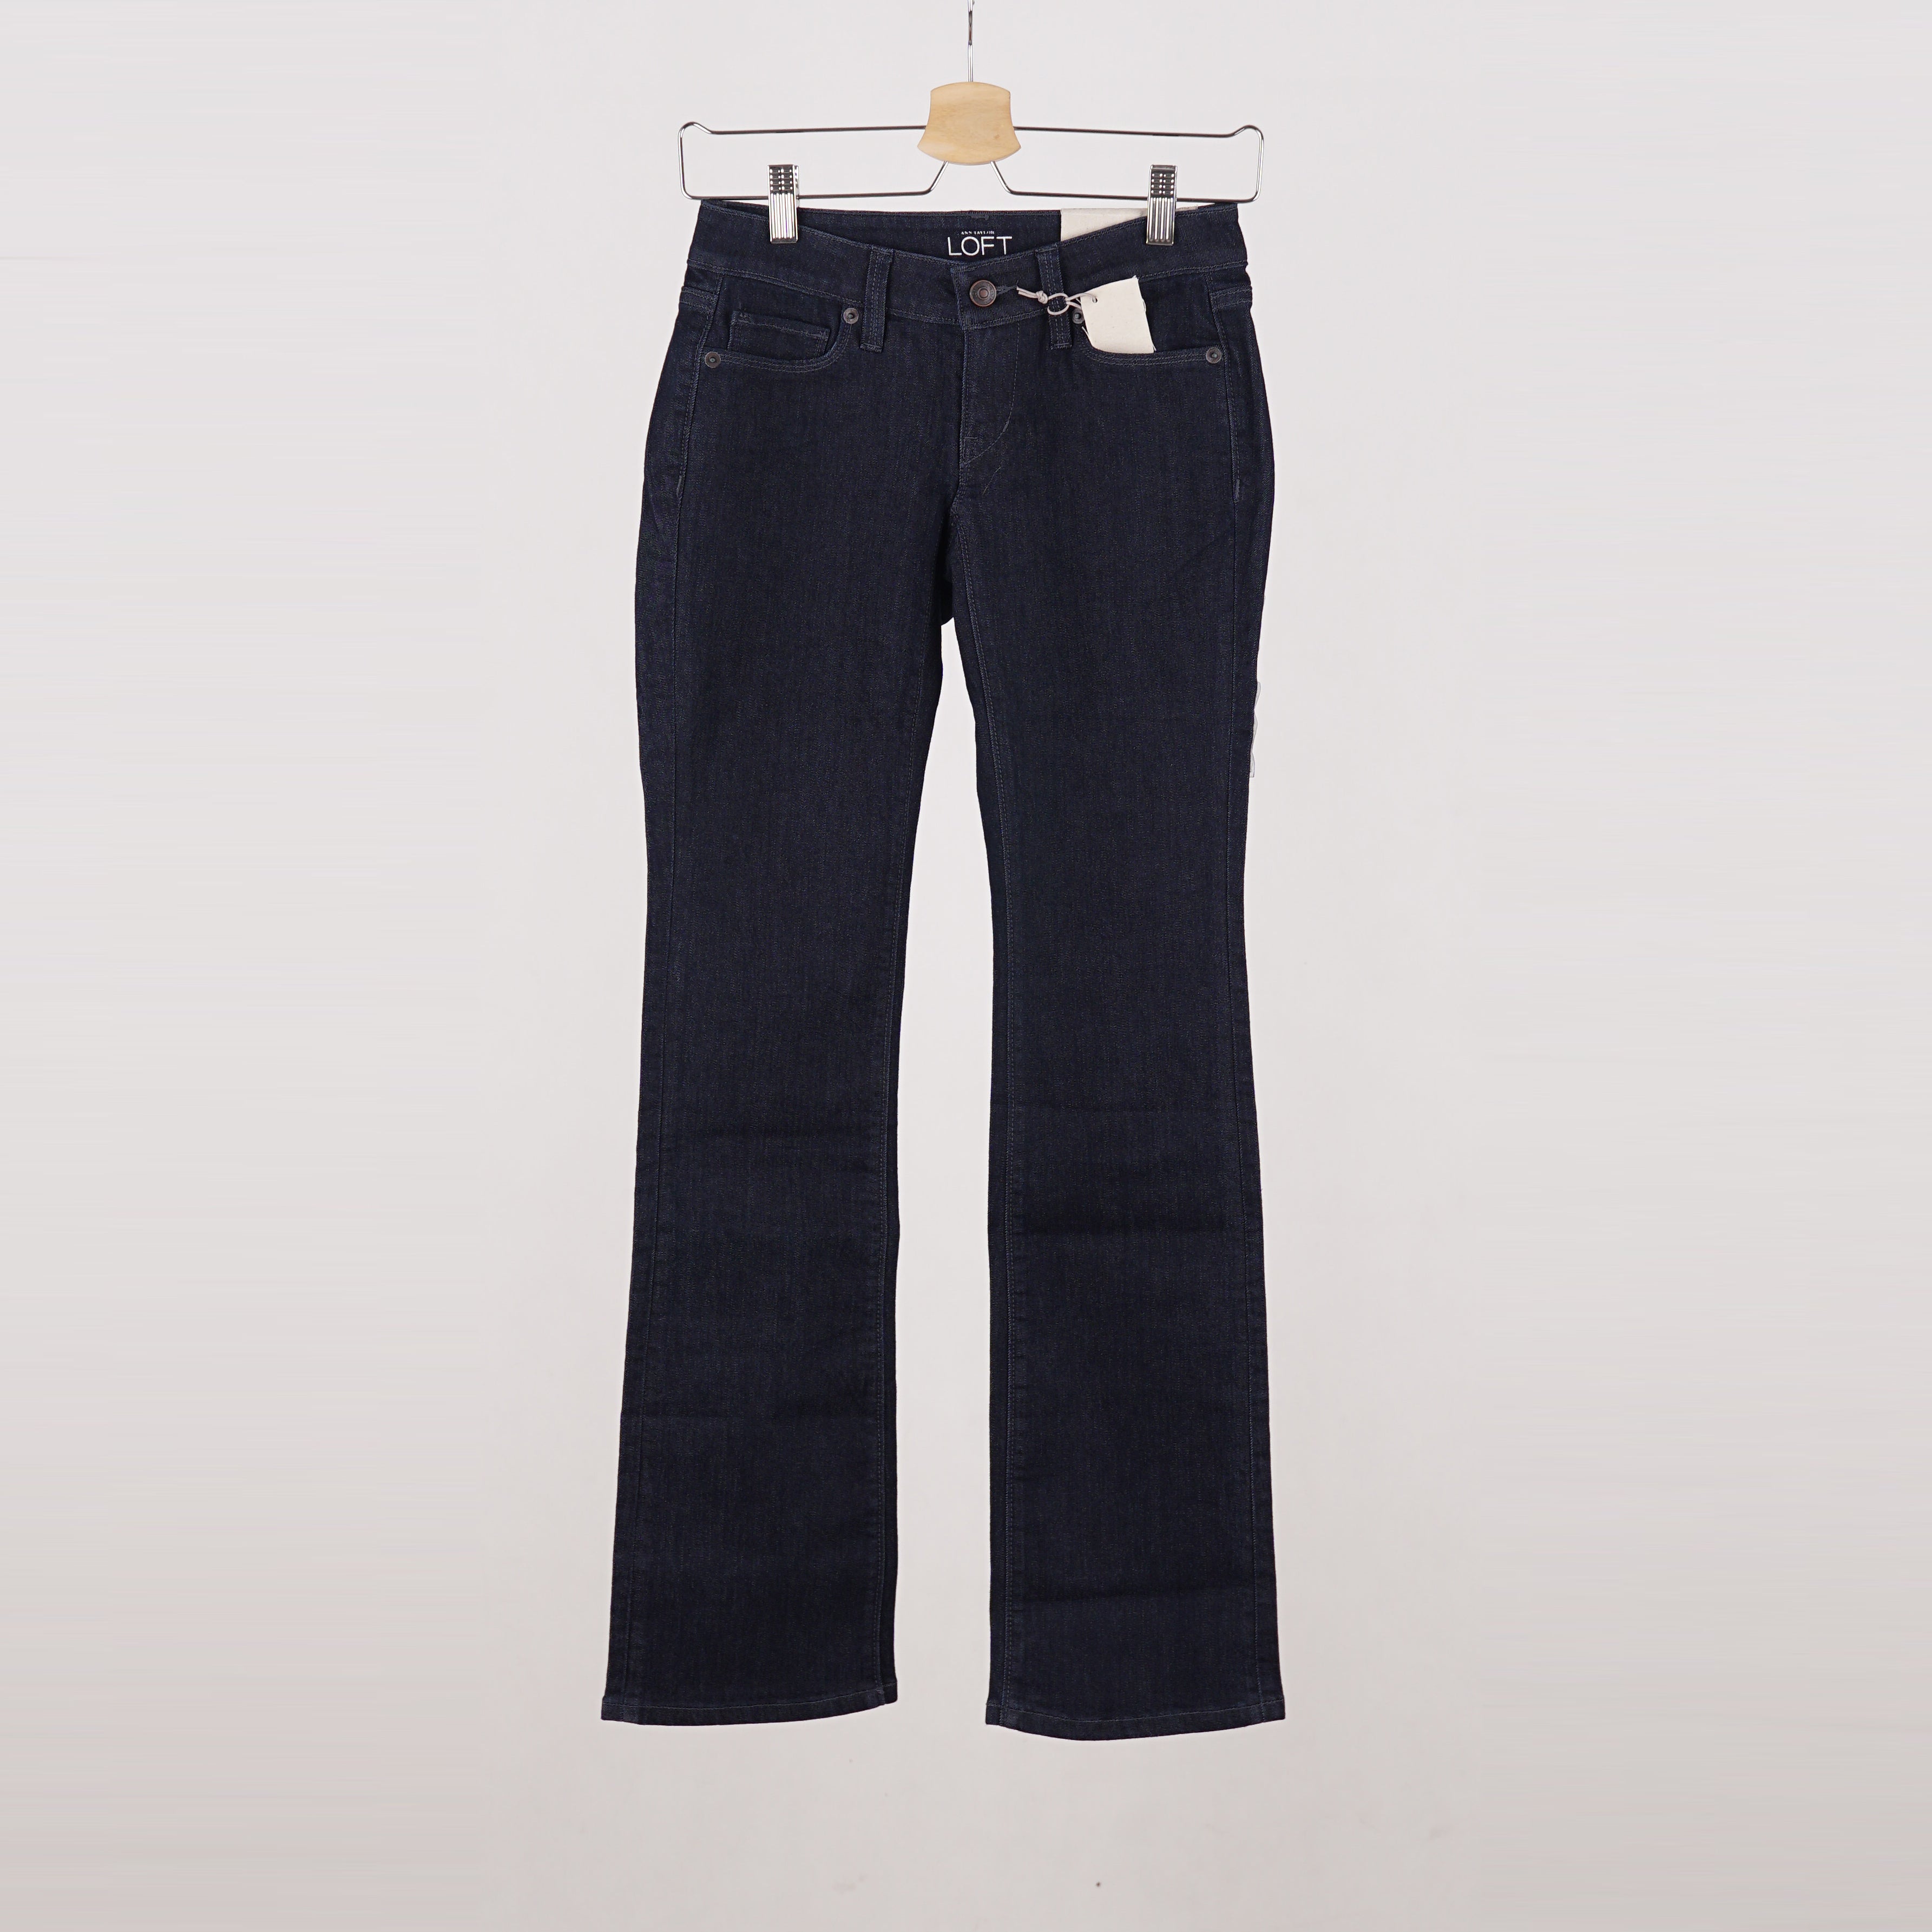 Celana Jeans Wanita - Denim Talbots Jeans (LDW 61)